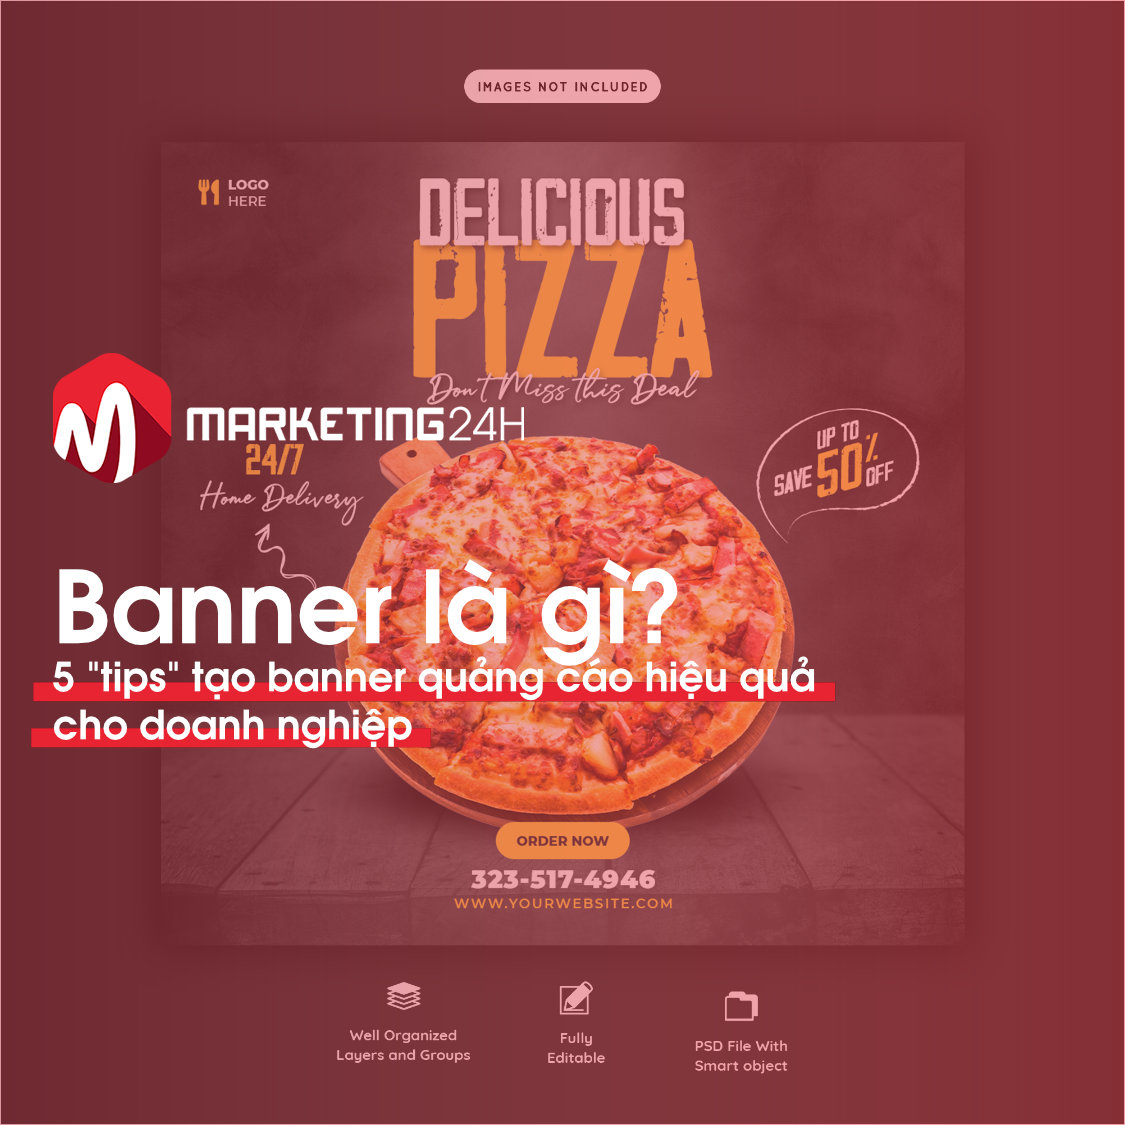 Banner-la-gi-marketing24h.vn